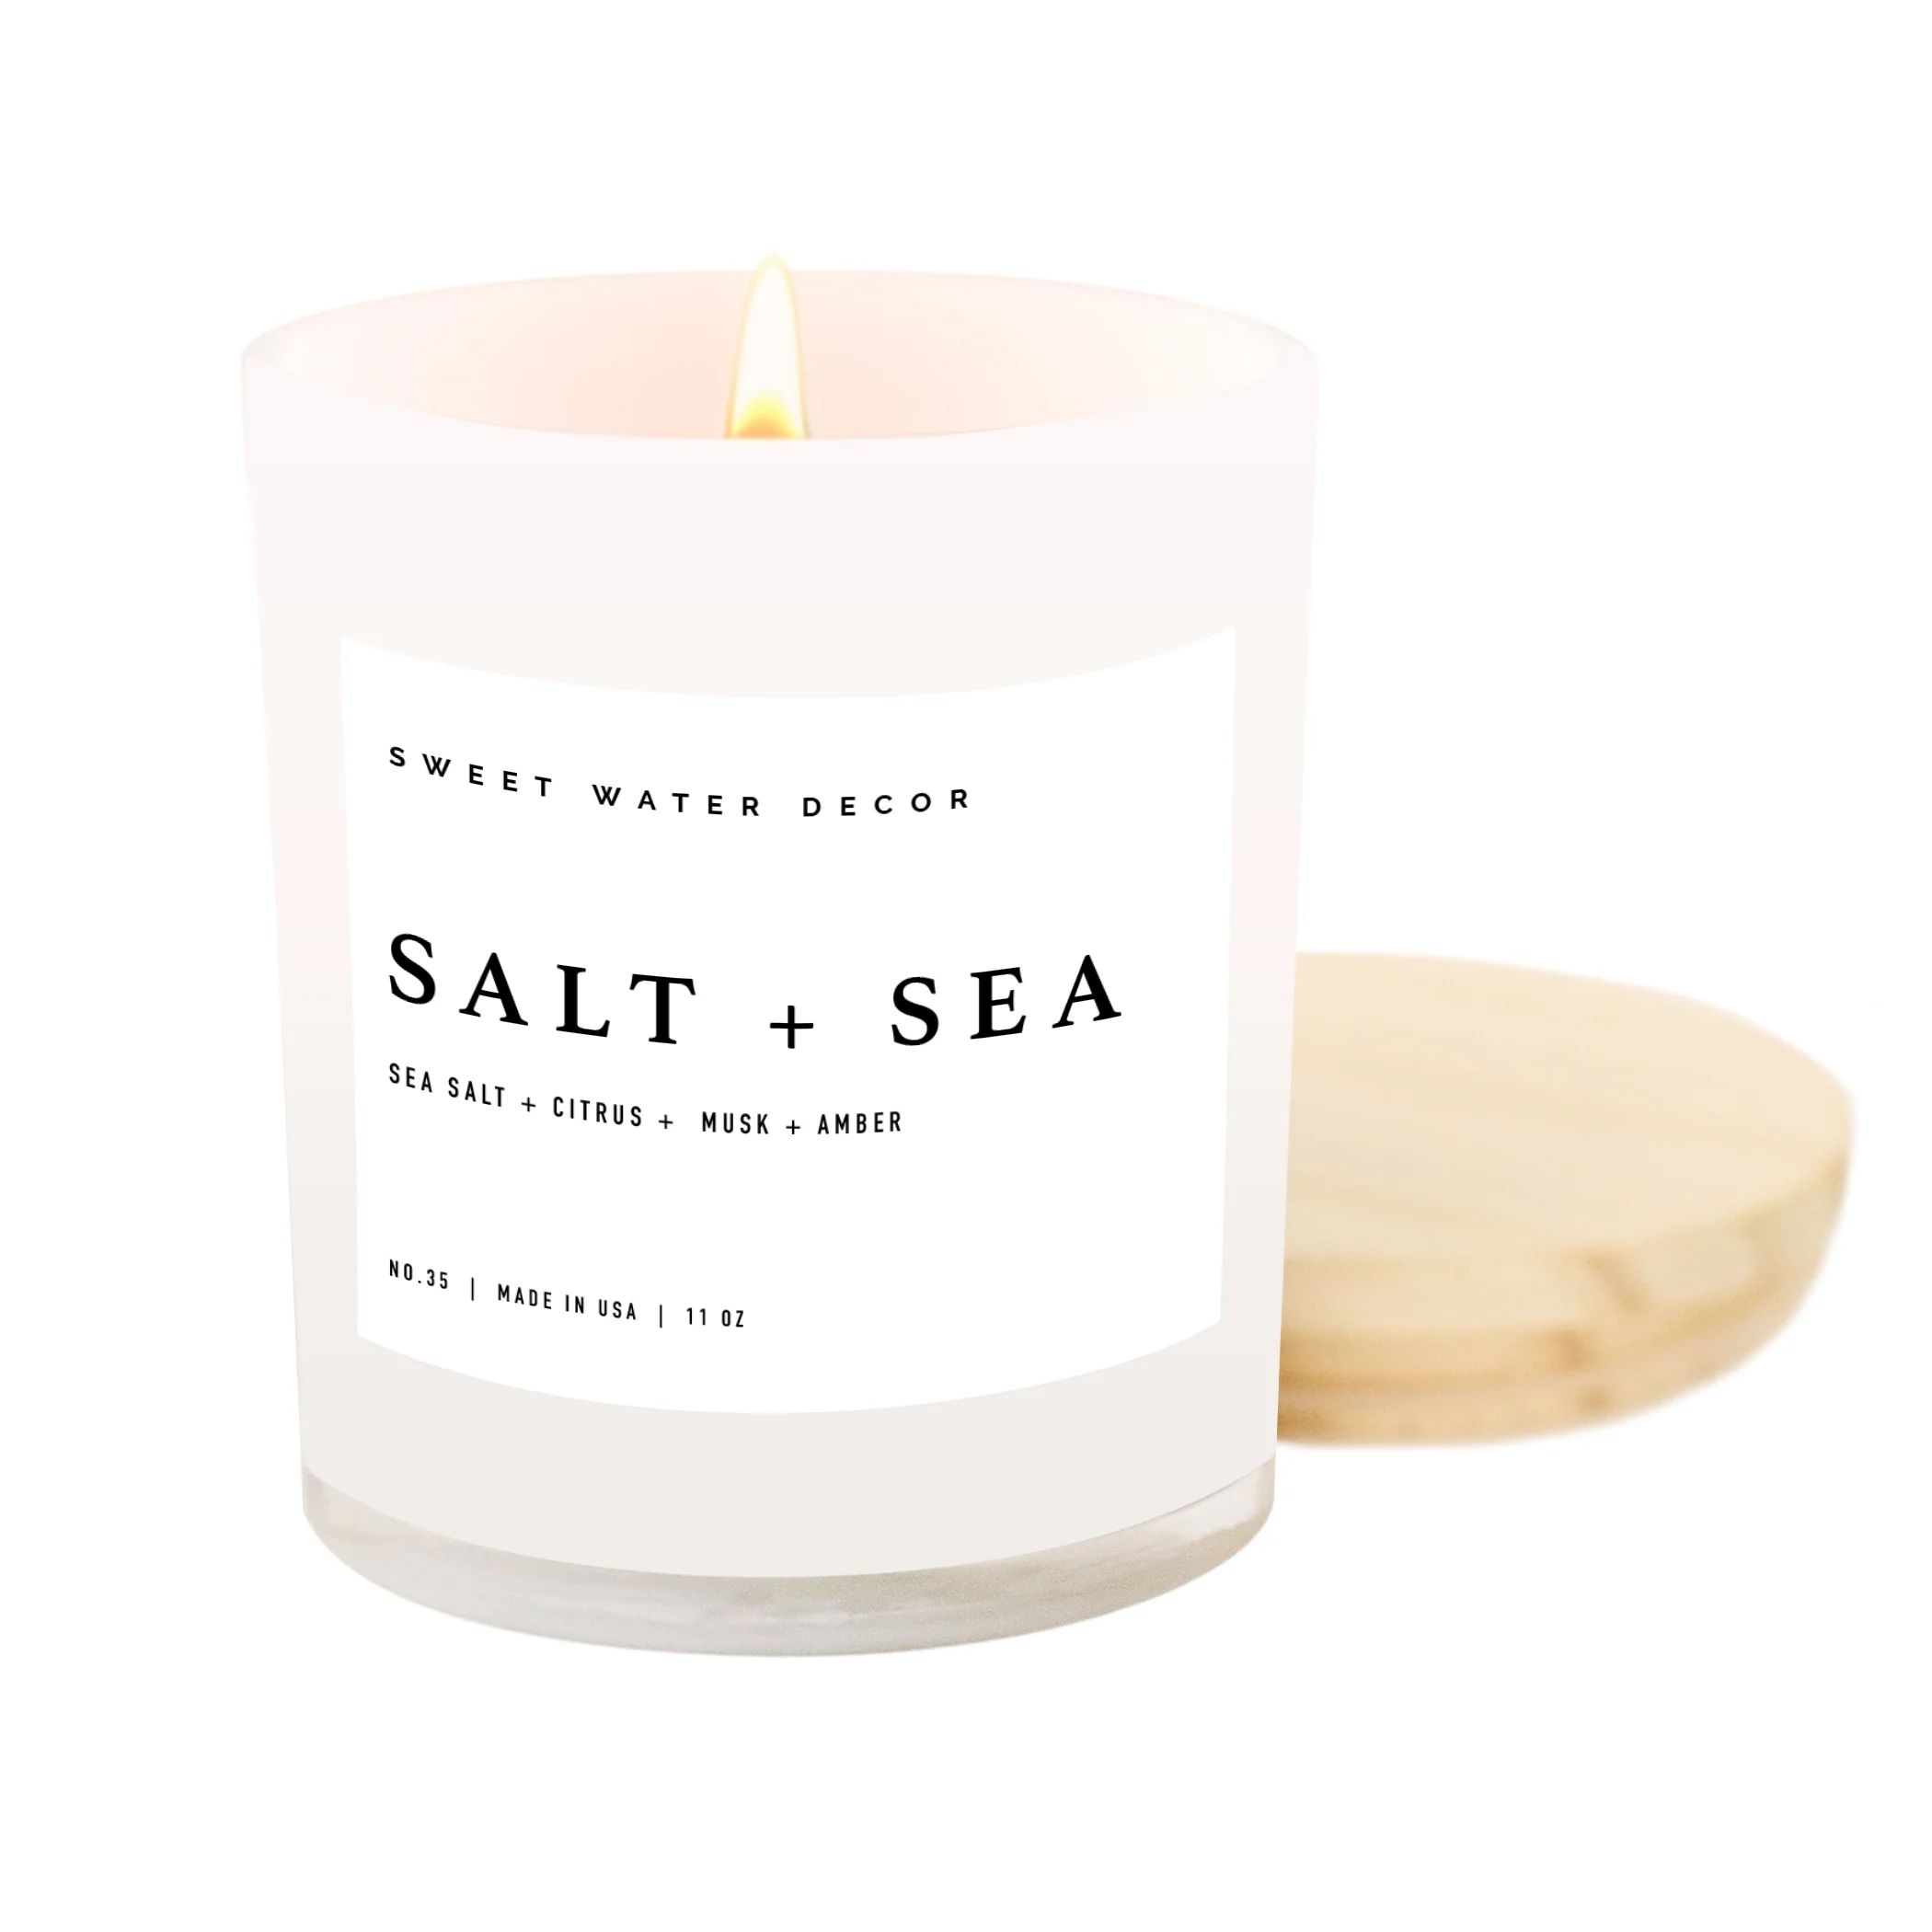 Salt + Sea Soy Candle | White Jar Candle + Wood Lid | Sweet Water Decor, LLC